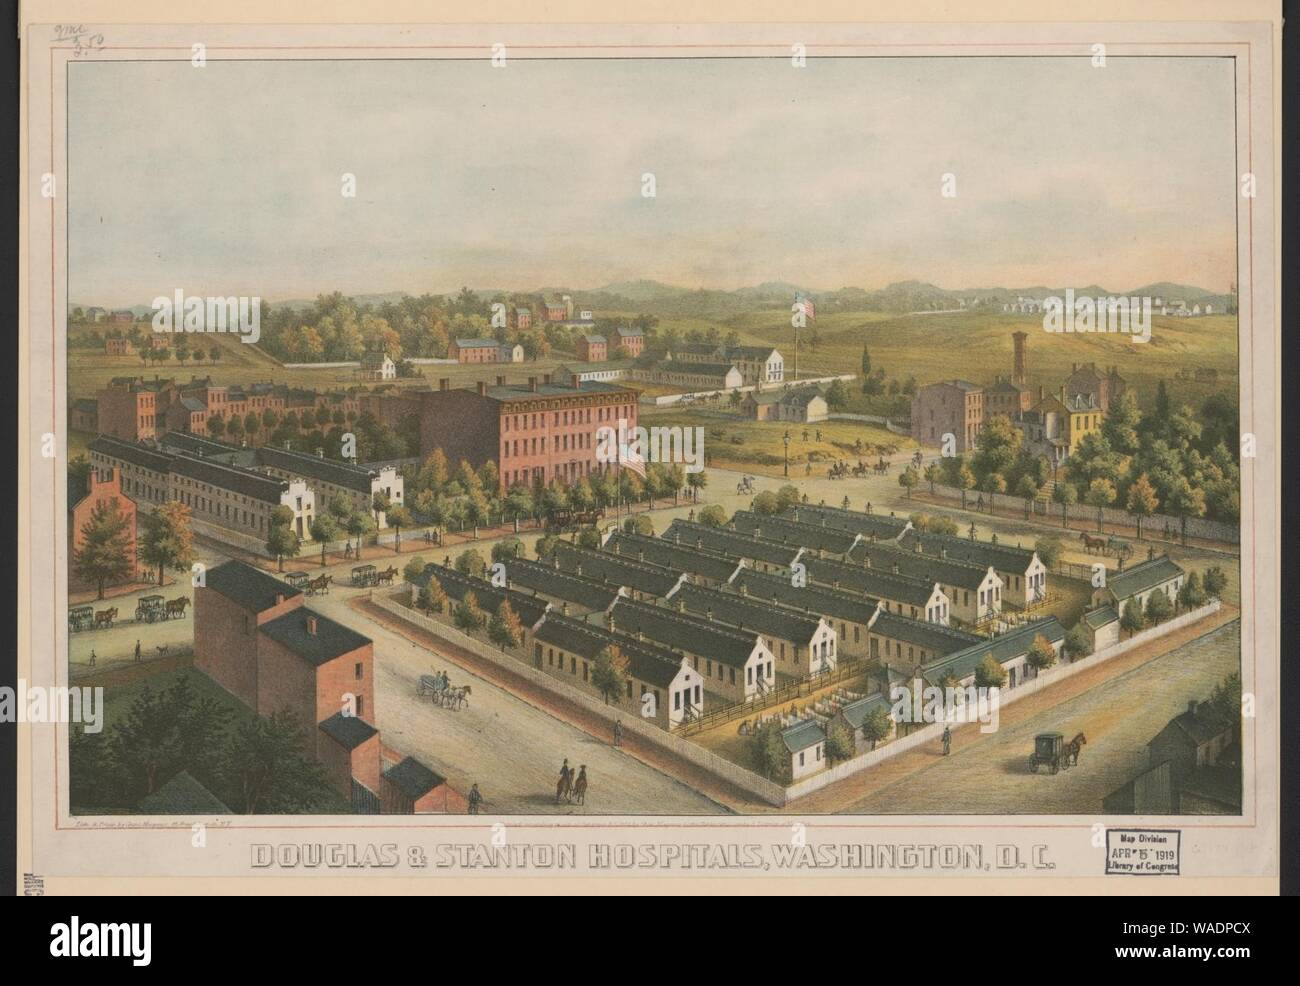 Douglas & Stanton Hospitals, Washington,D.C. - lith. & print. by Chas. Magnus, N.Y. Stock Photo